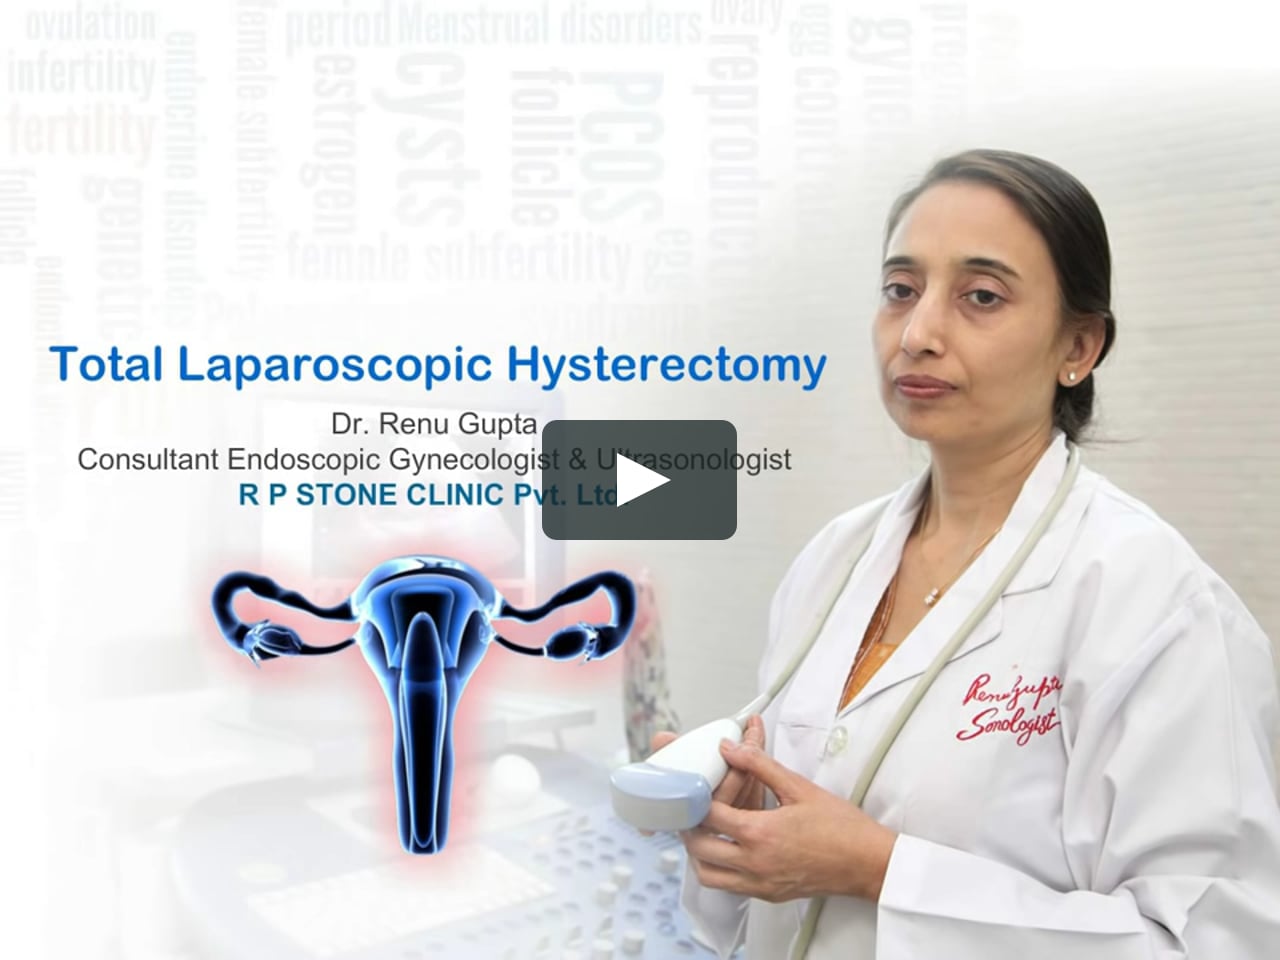 Animation of Total Laparoscopic Hysterectomy | Chicago Gynecology on Vimeo